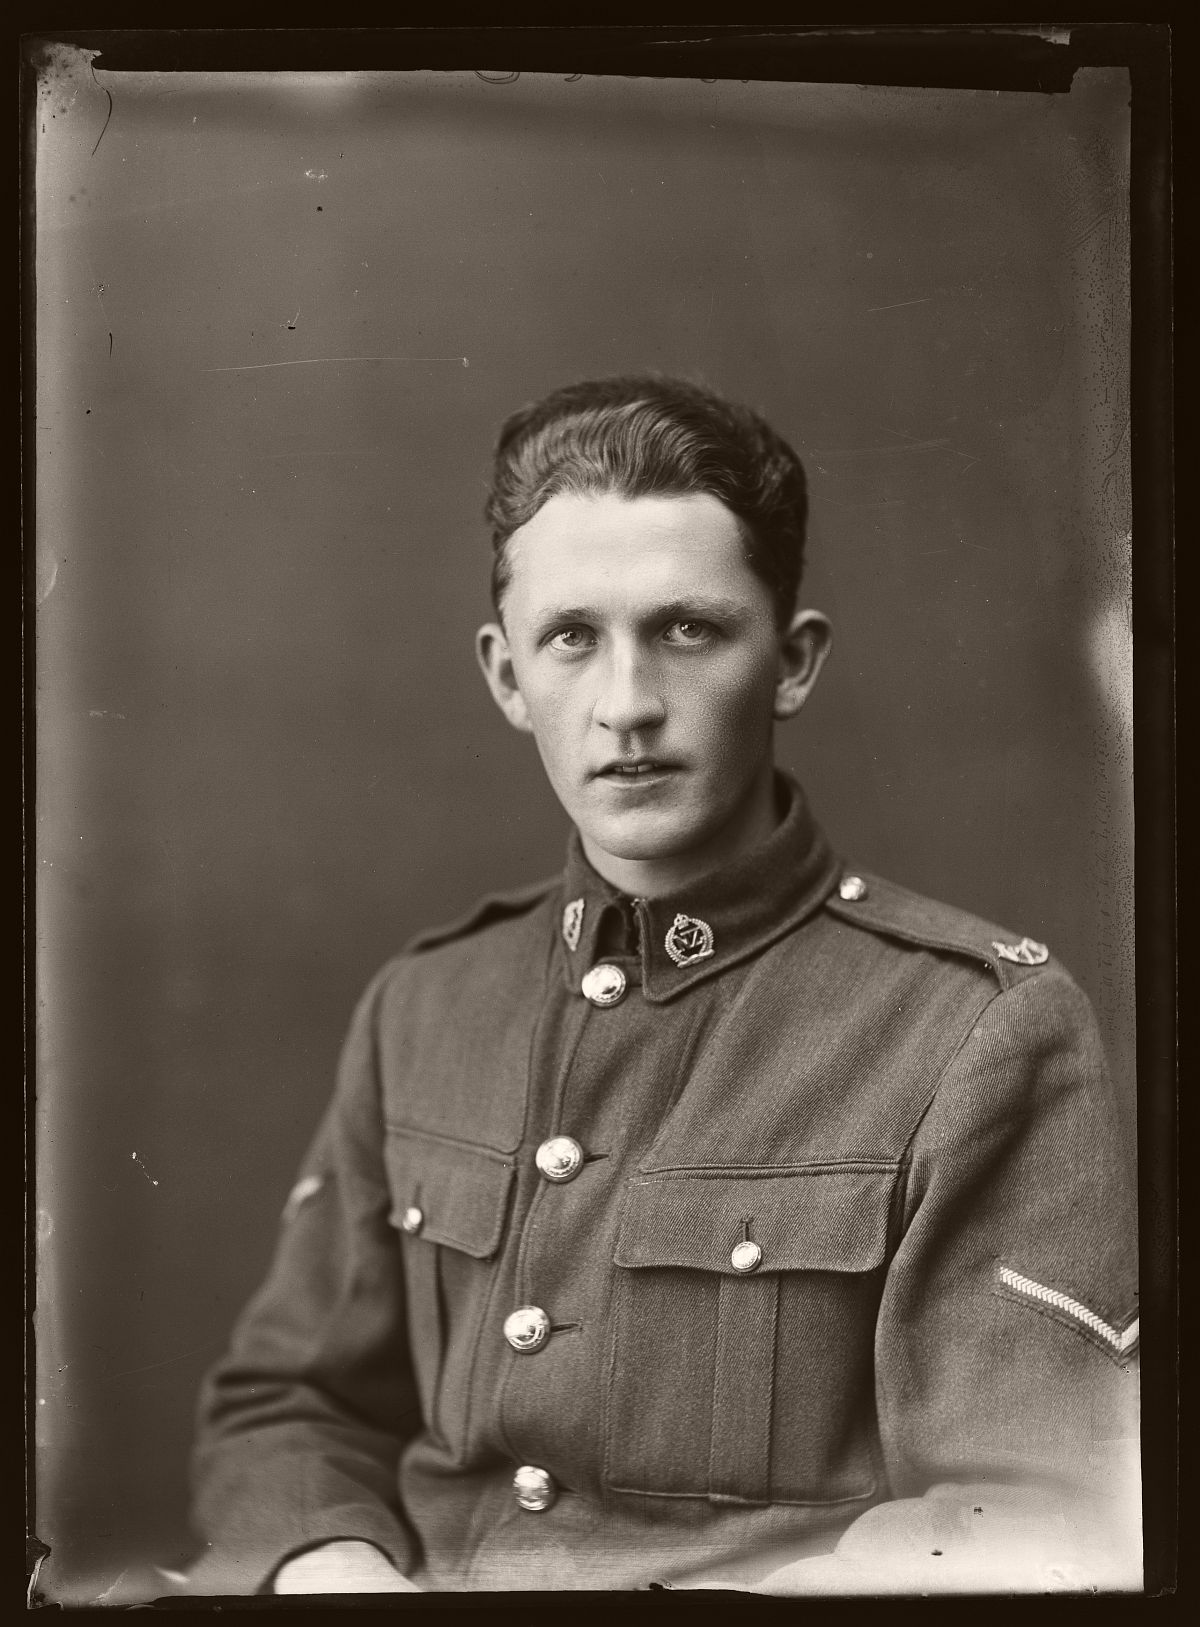 Photo by William Berry, circa 1915-1920, Wellington 